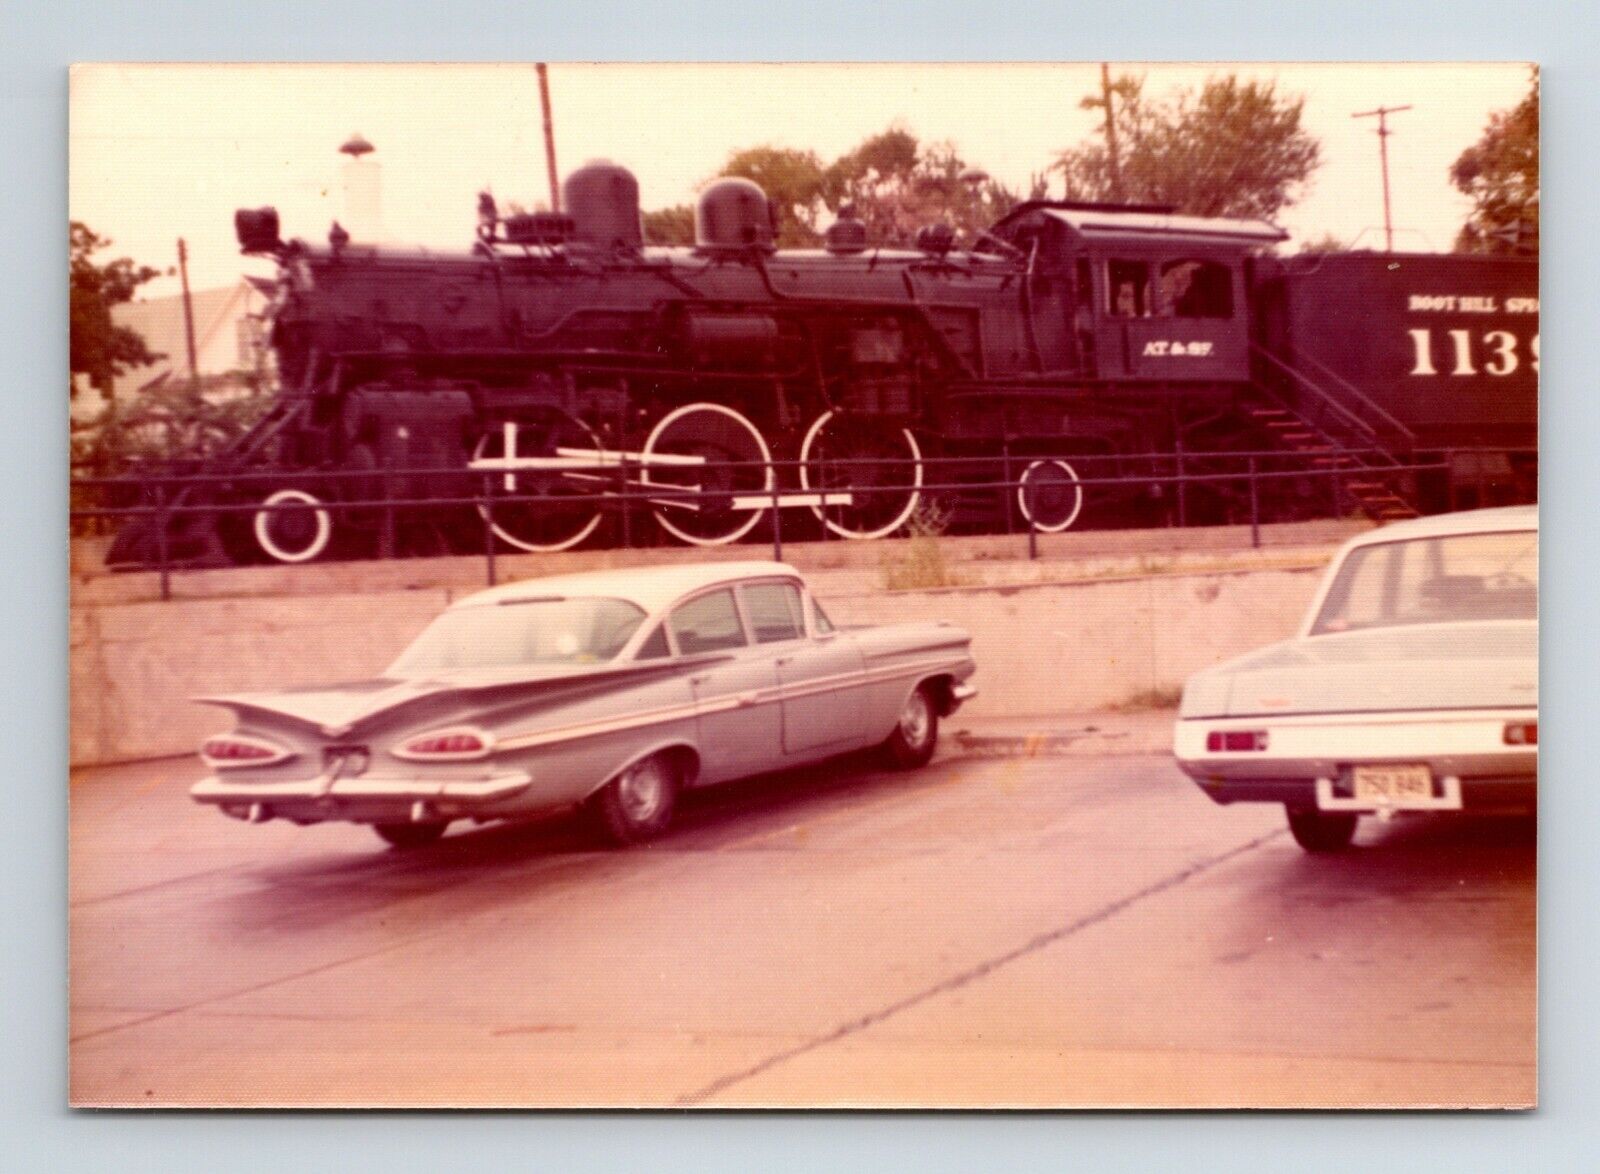 wd3 Original Photo 1973 Dodge City ATSF 1139 2-6-2 Locomotive Winged Car 377a